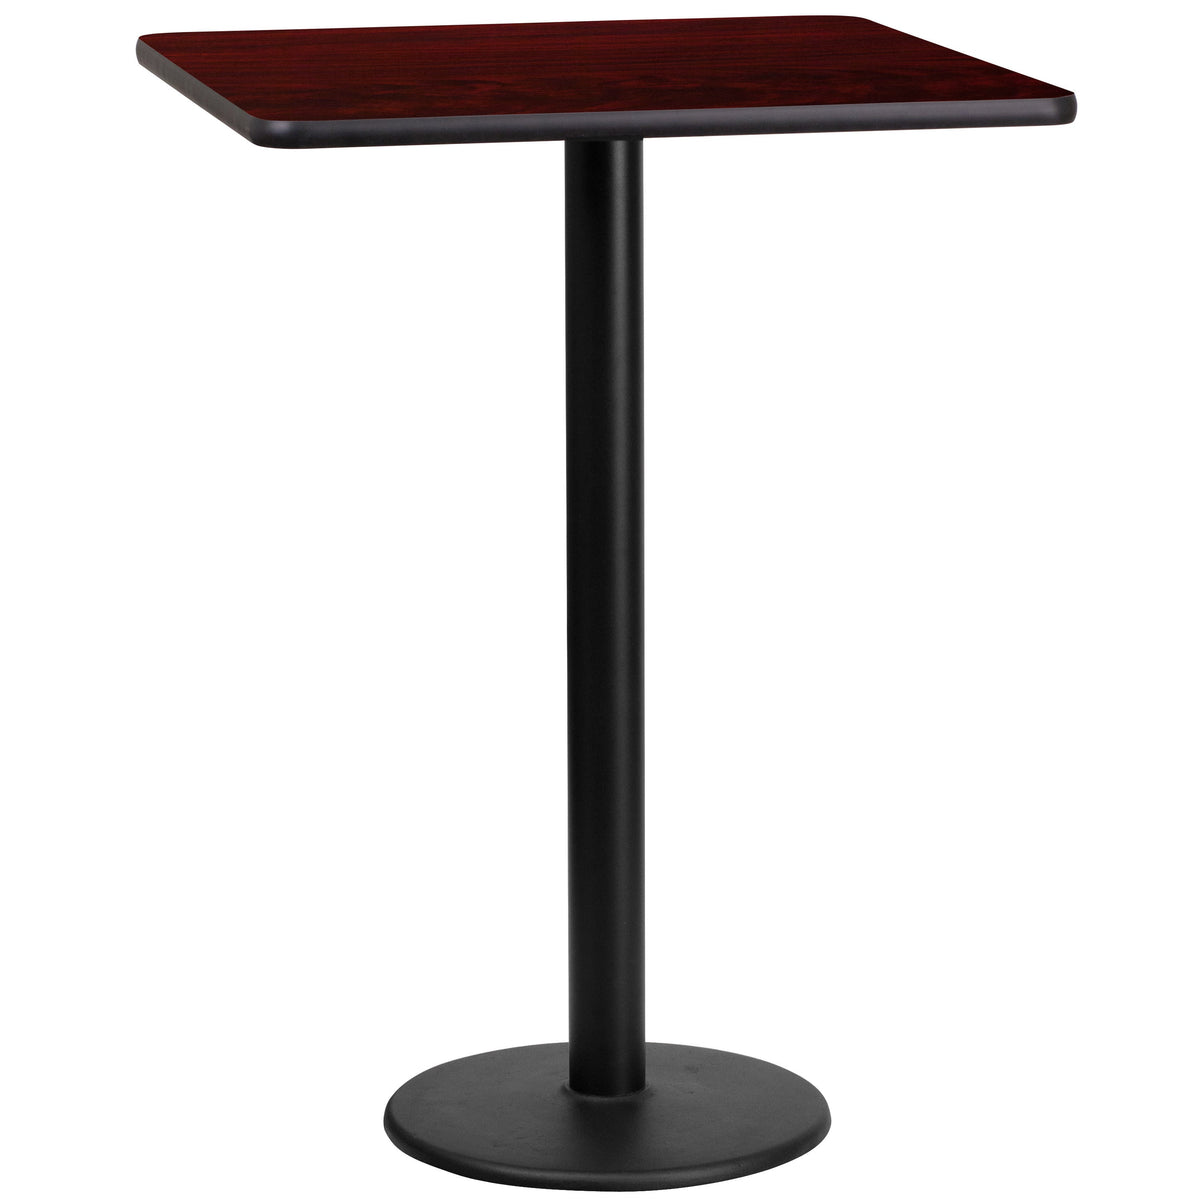 Mahogany |#| 24inch Square Mahogany Laminate Table Top with 18inch Round Bar Height Table Base